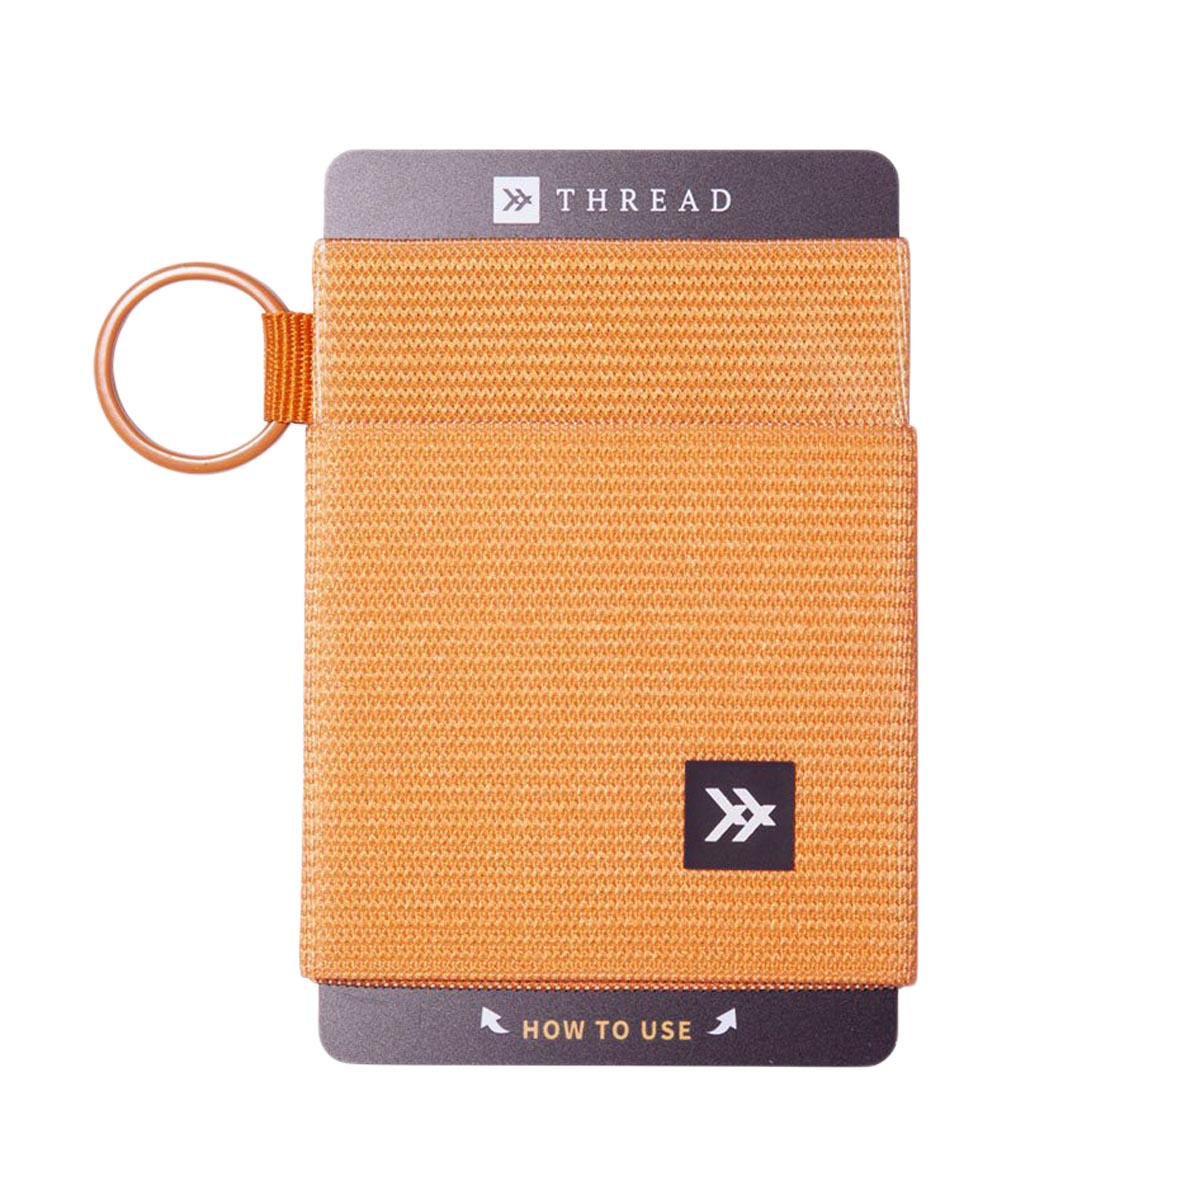 Thread Elastic Wallet - Marigold